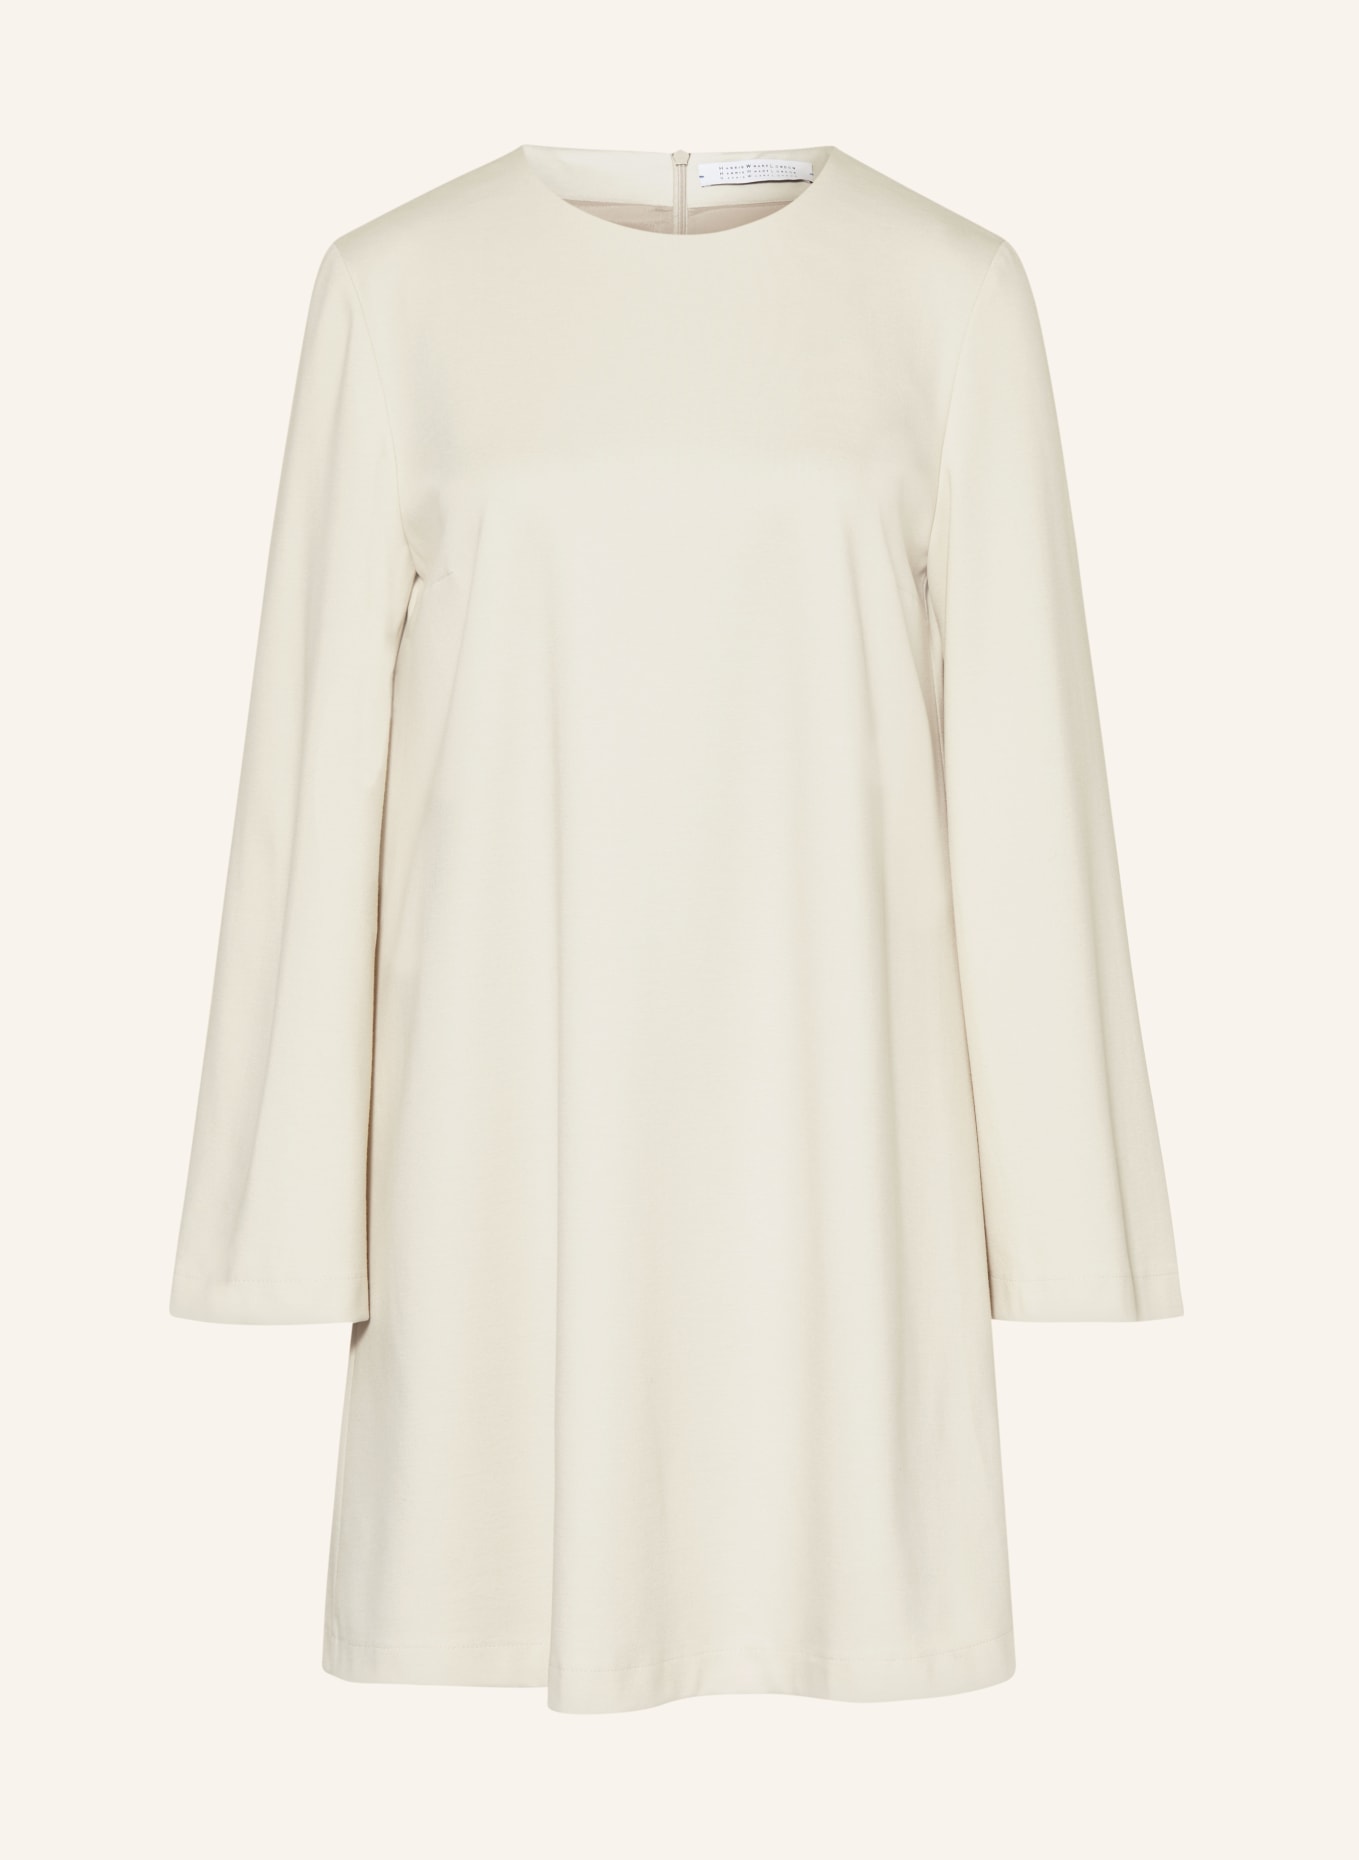 HARRIS WHARF LONDON Kleid, Farbe: CREME (Bild 1)